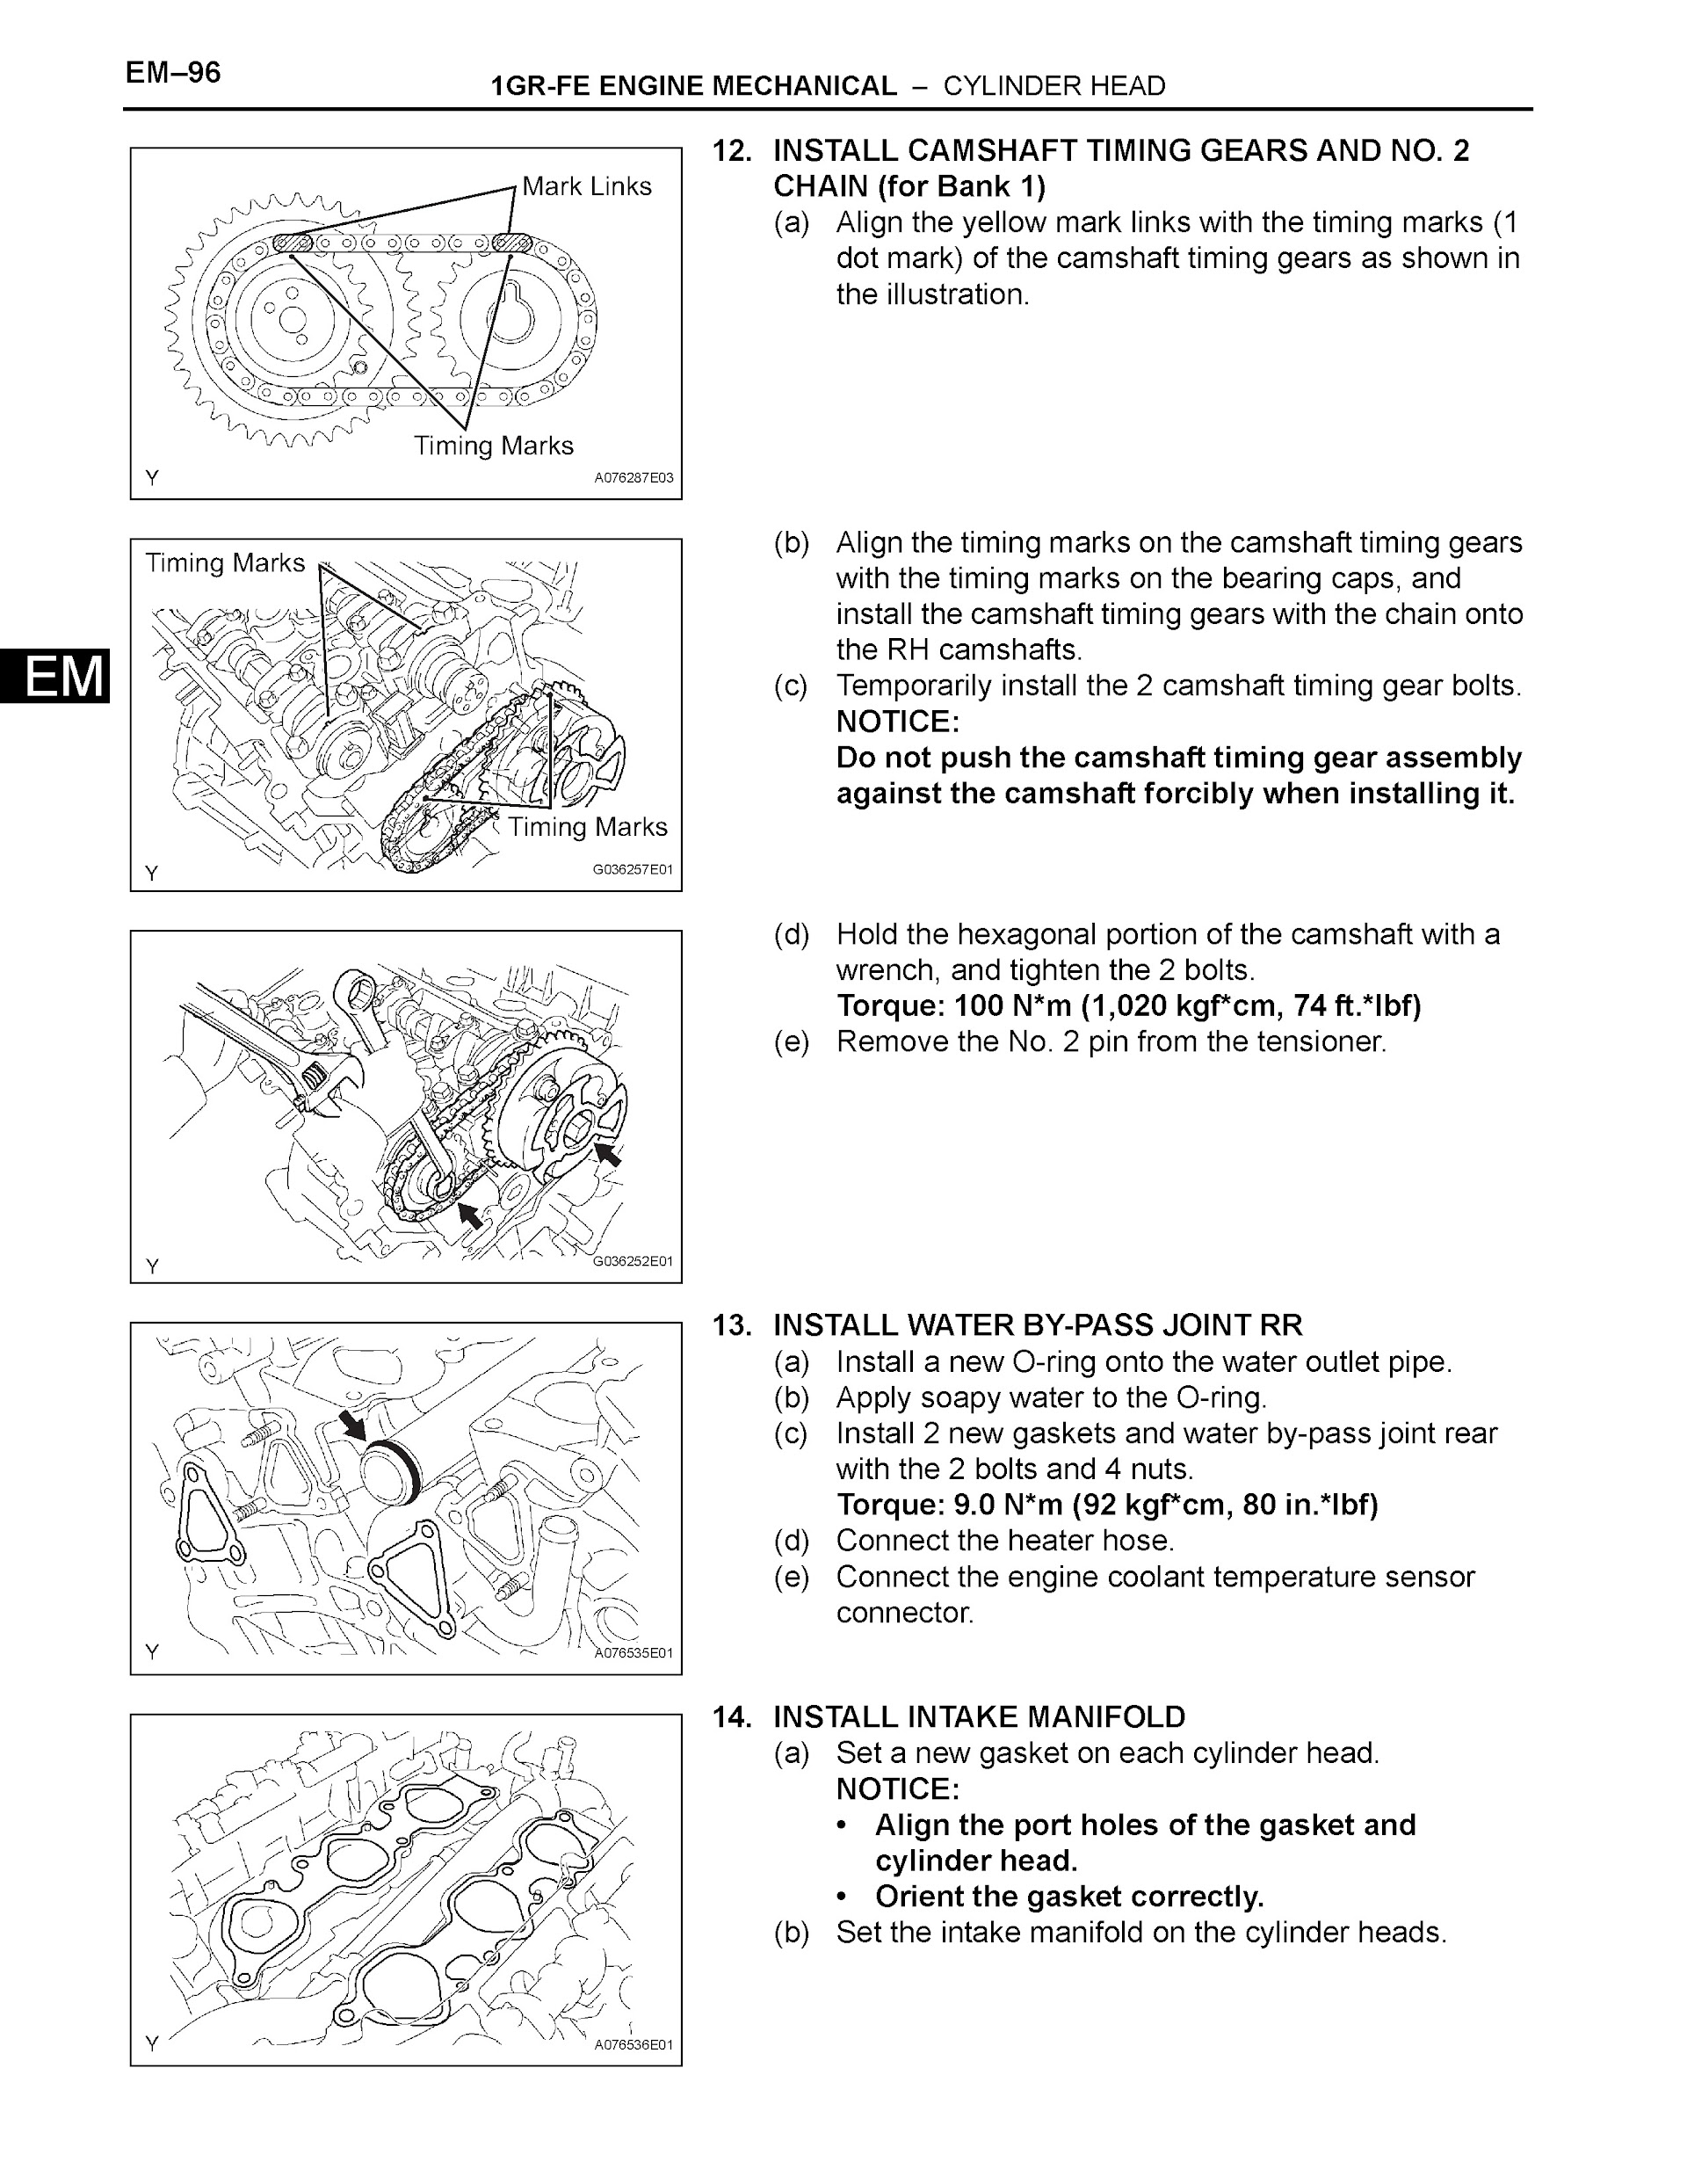 Toyota FJ Cruiser Repair Manual, 1GR-FE Engine Mechanical, Cylinder Head